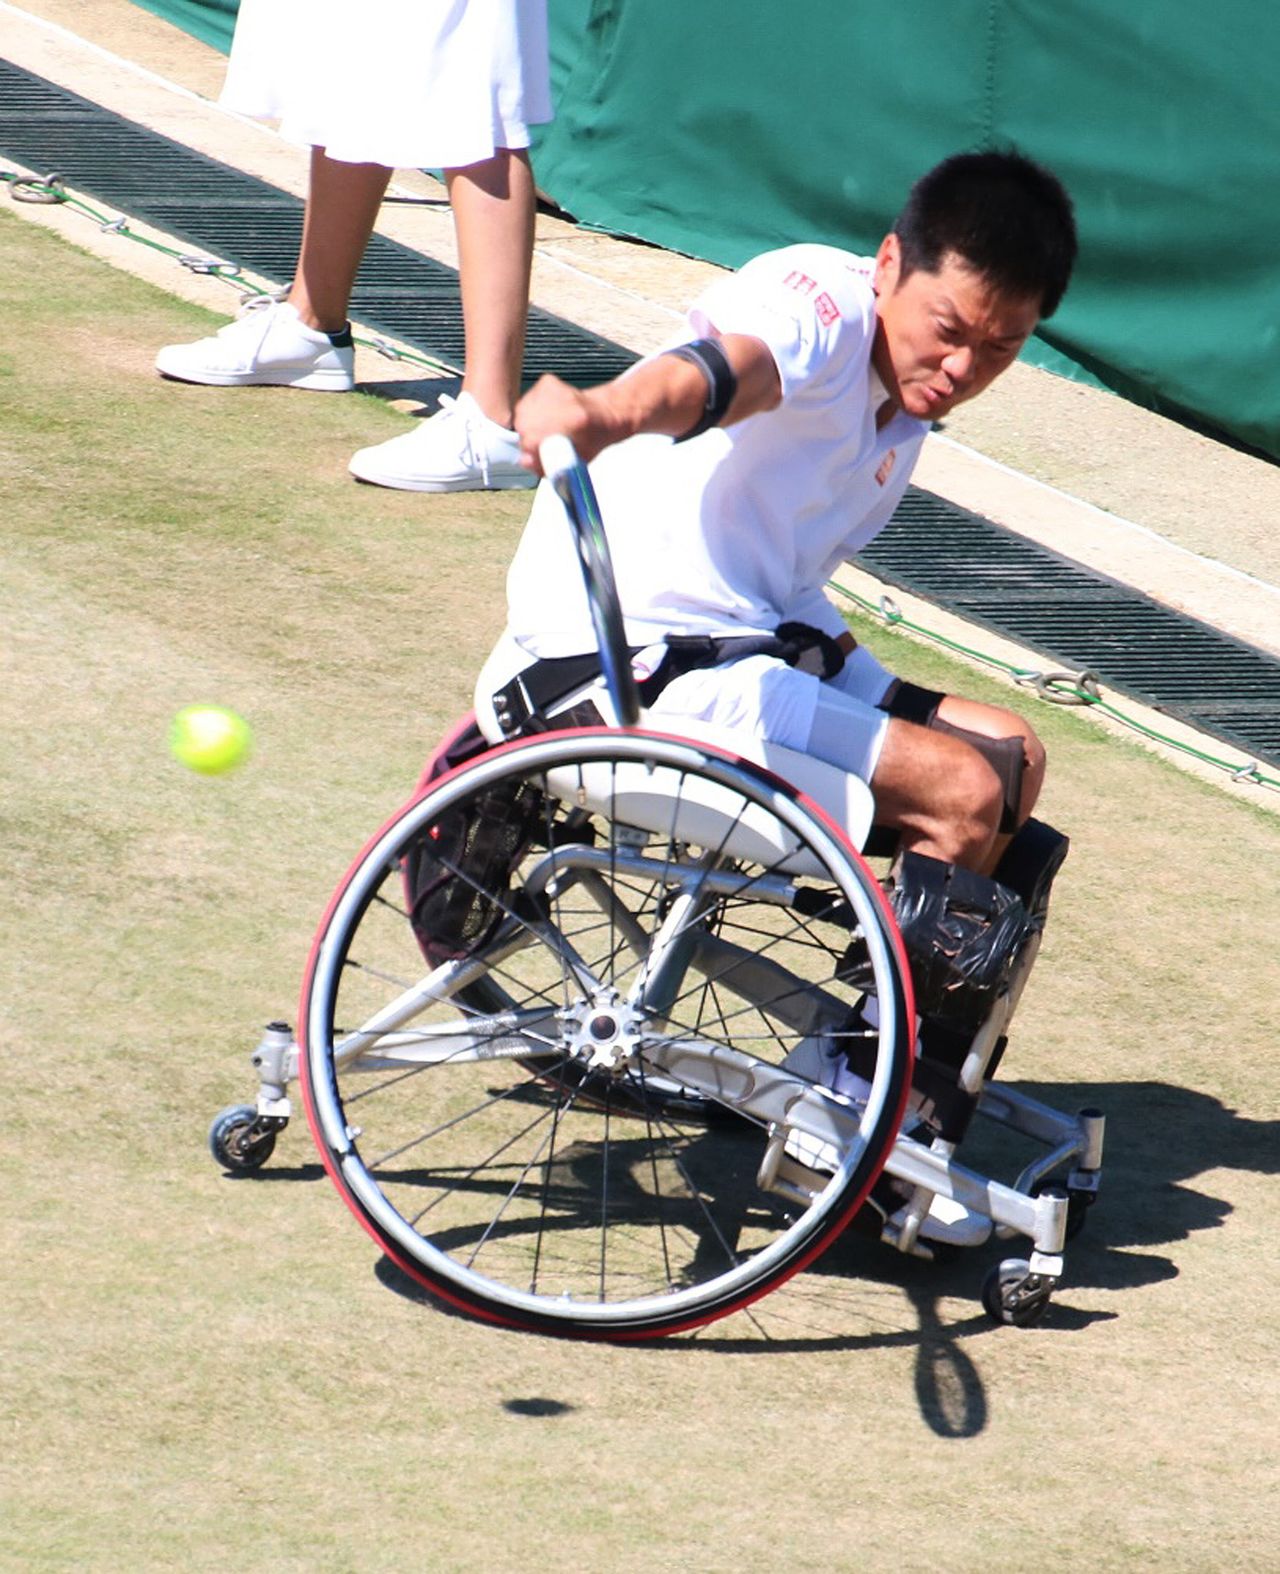 Kunieda Shingo in action at Wimbledon on July 10, 2022. (© Jiji)